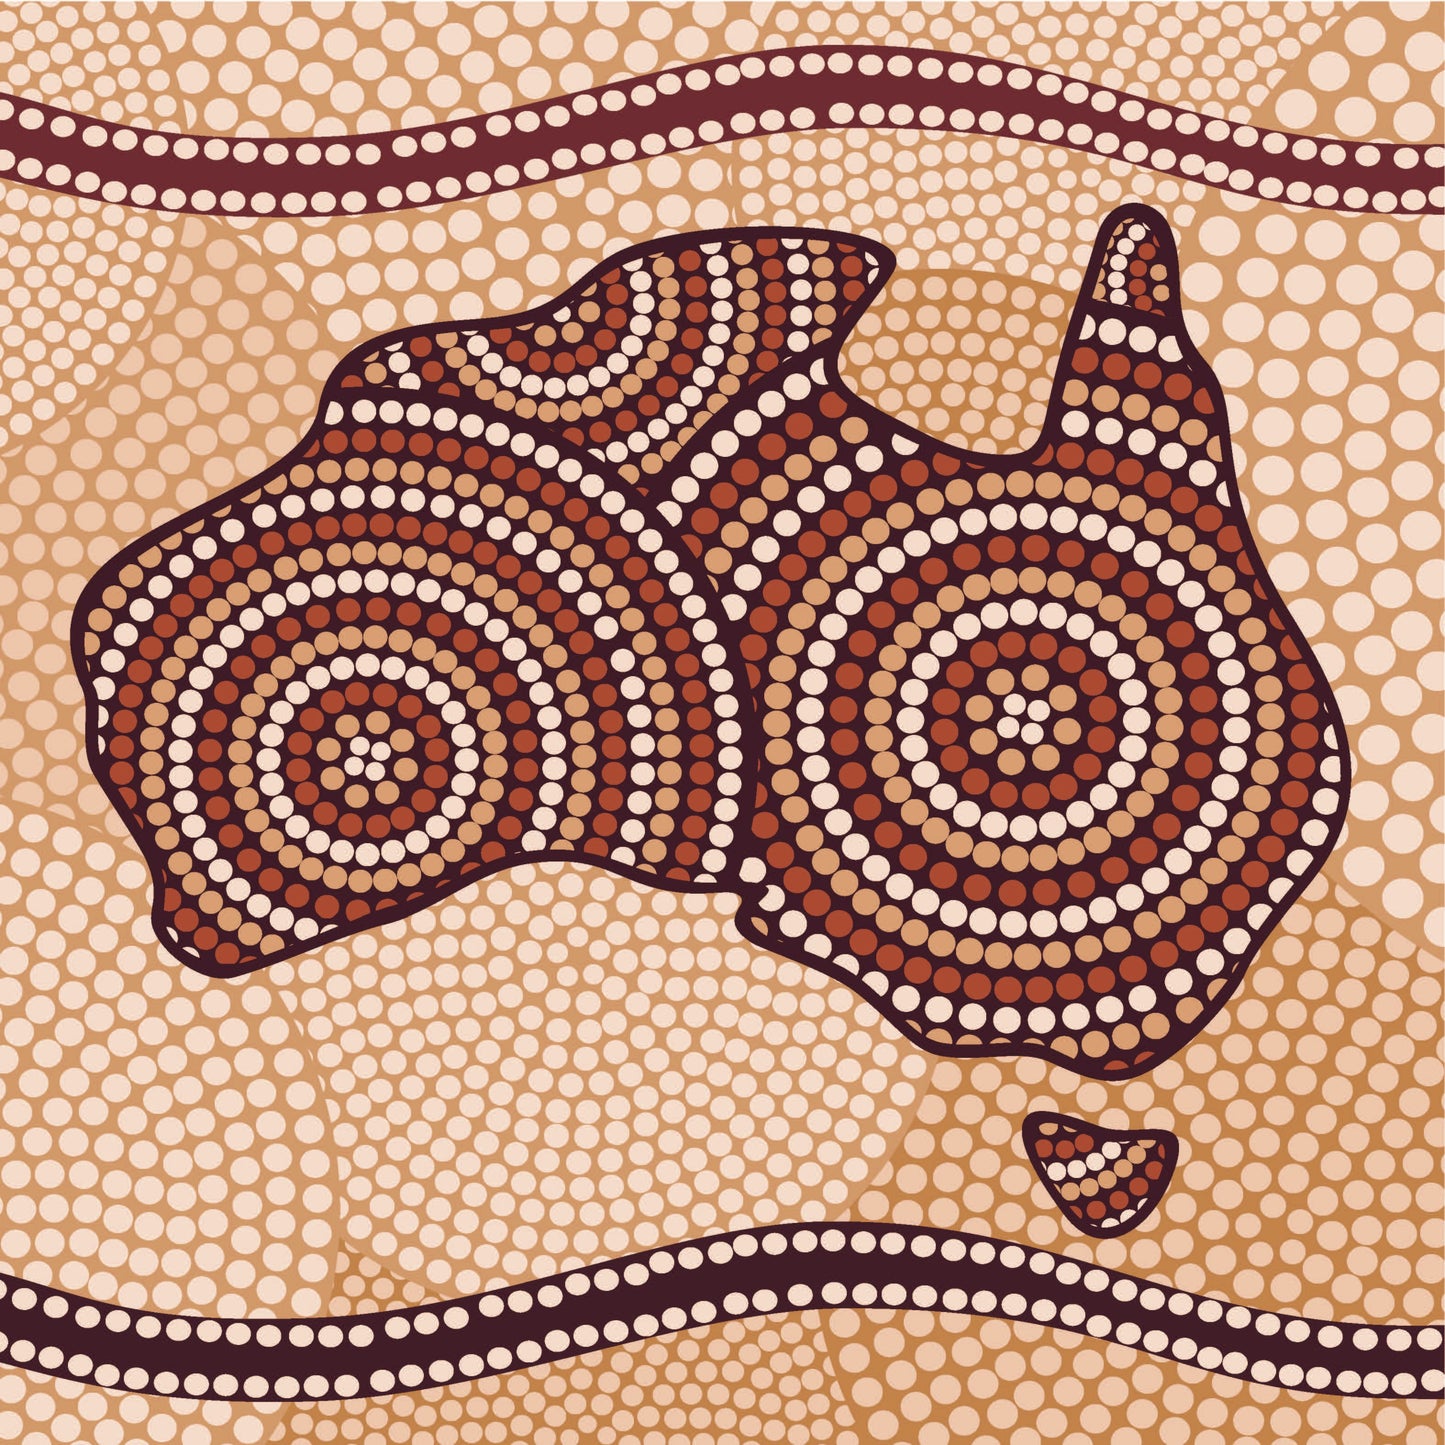 Indigenous Australia